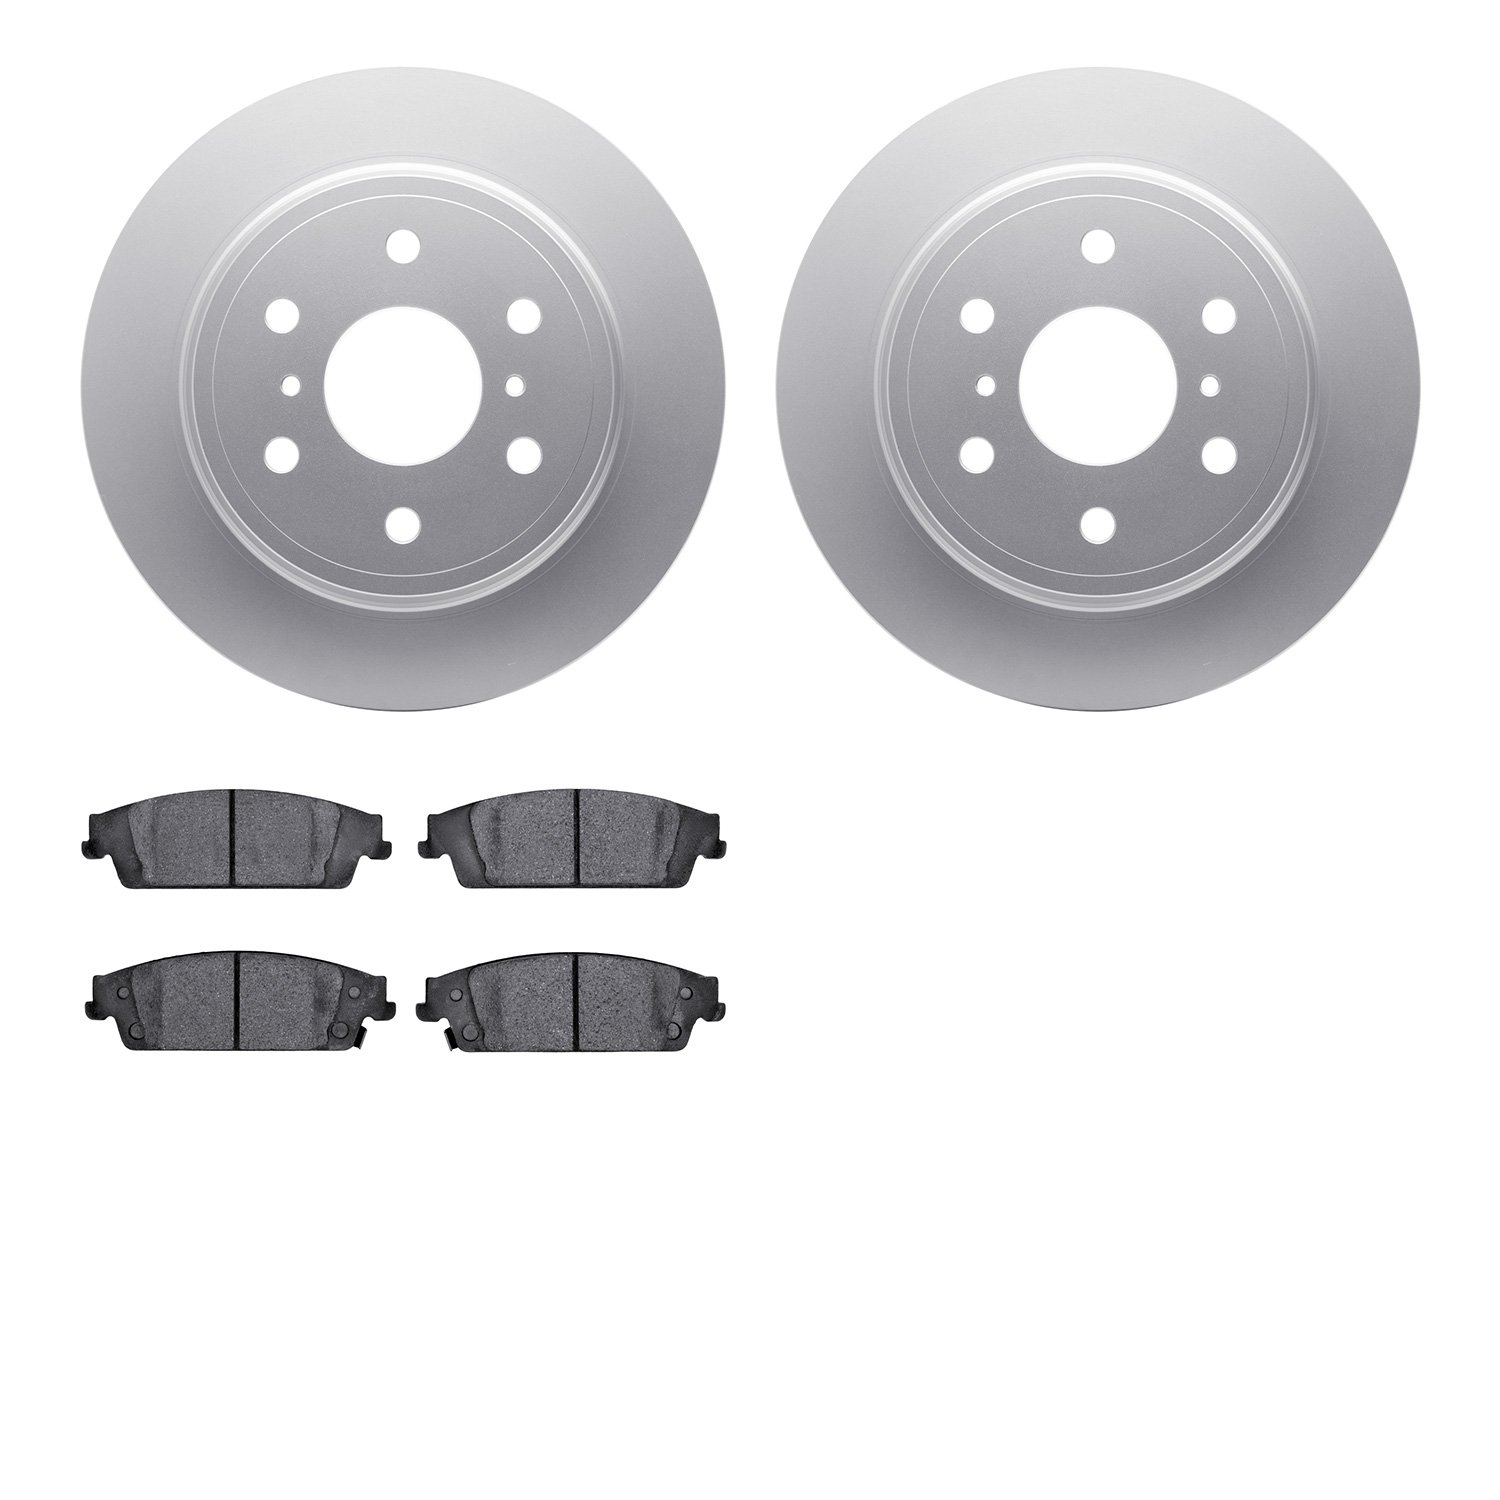 Geospec Brake Rotors with Ultimate-Duty Brake Pads Kit,